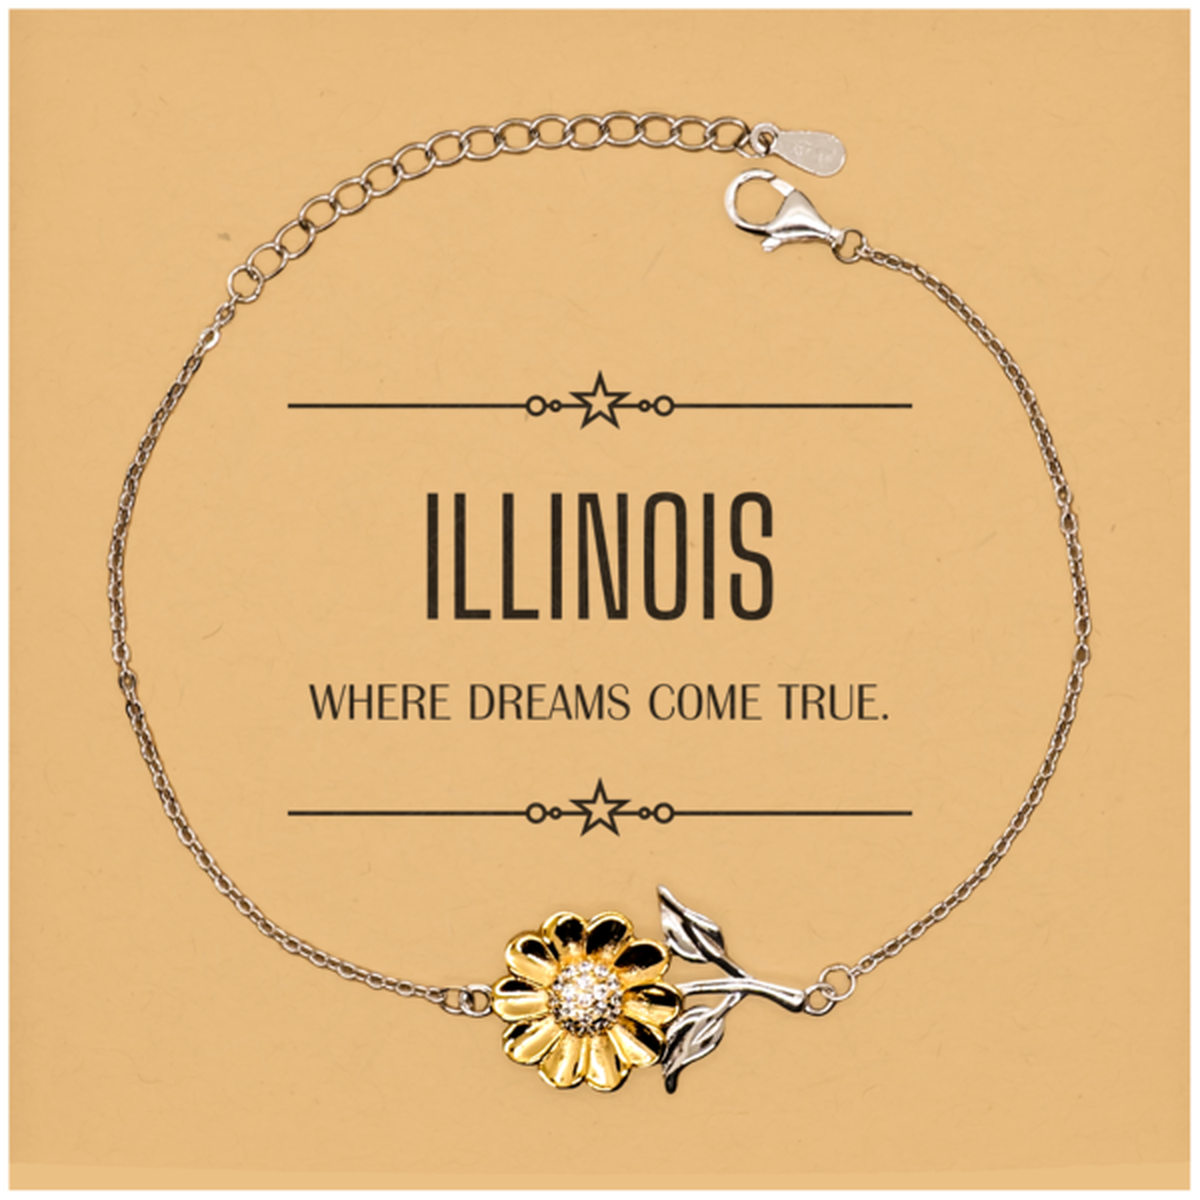 Love Illinois State Sunflower Bracelet, Illinois Where dreams come true, Birthday Christmas Inspirational Gifts For Illinois Men, Women, Friends